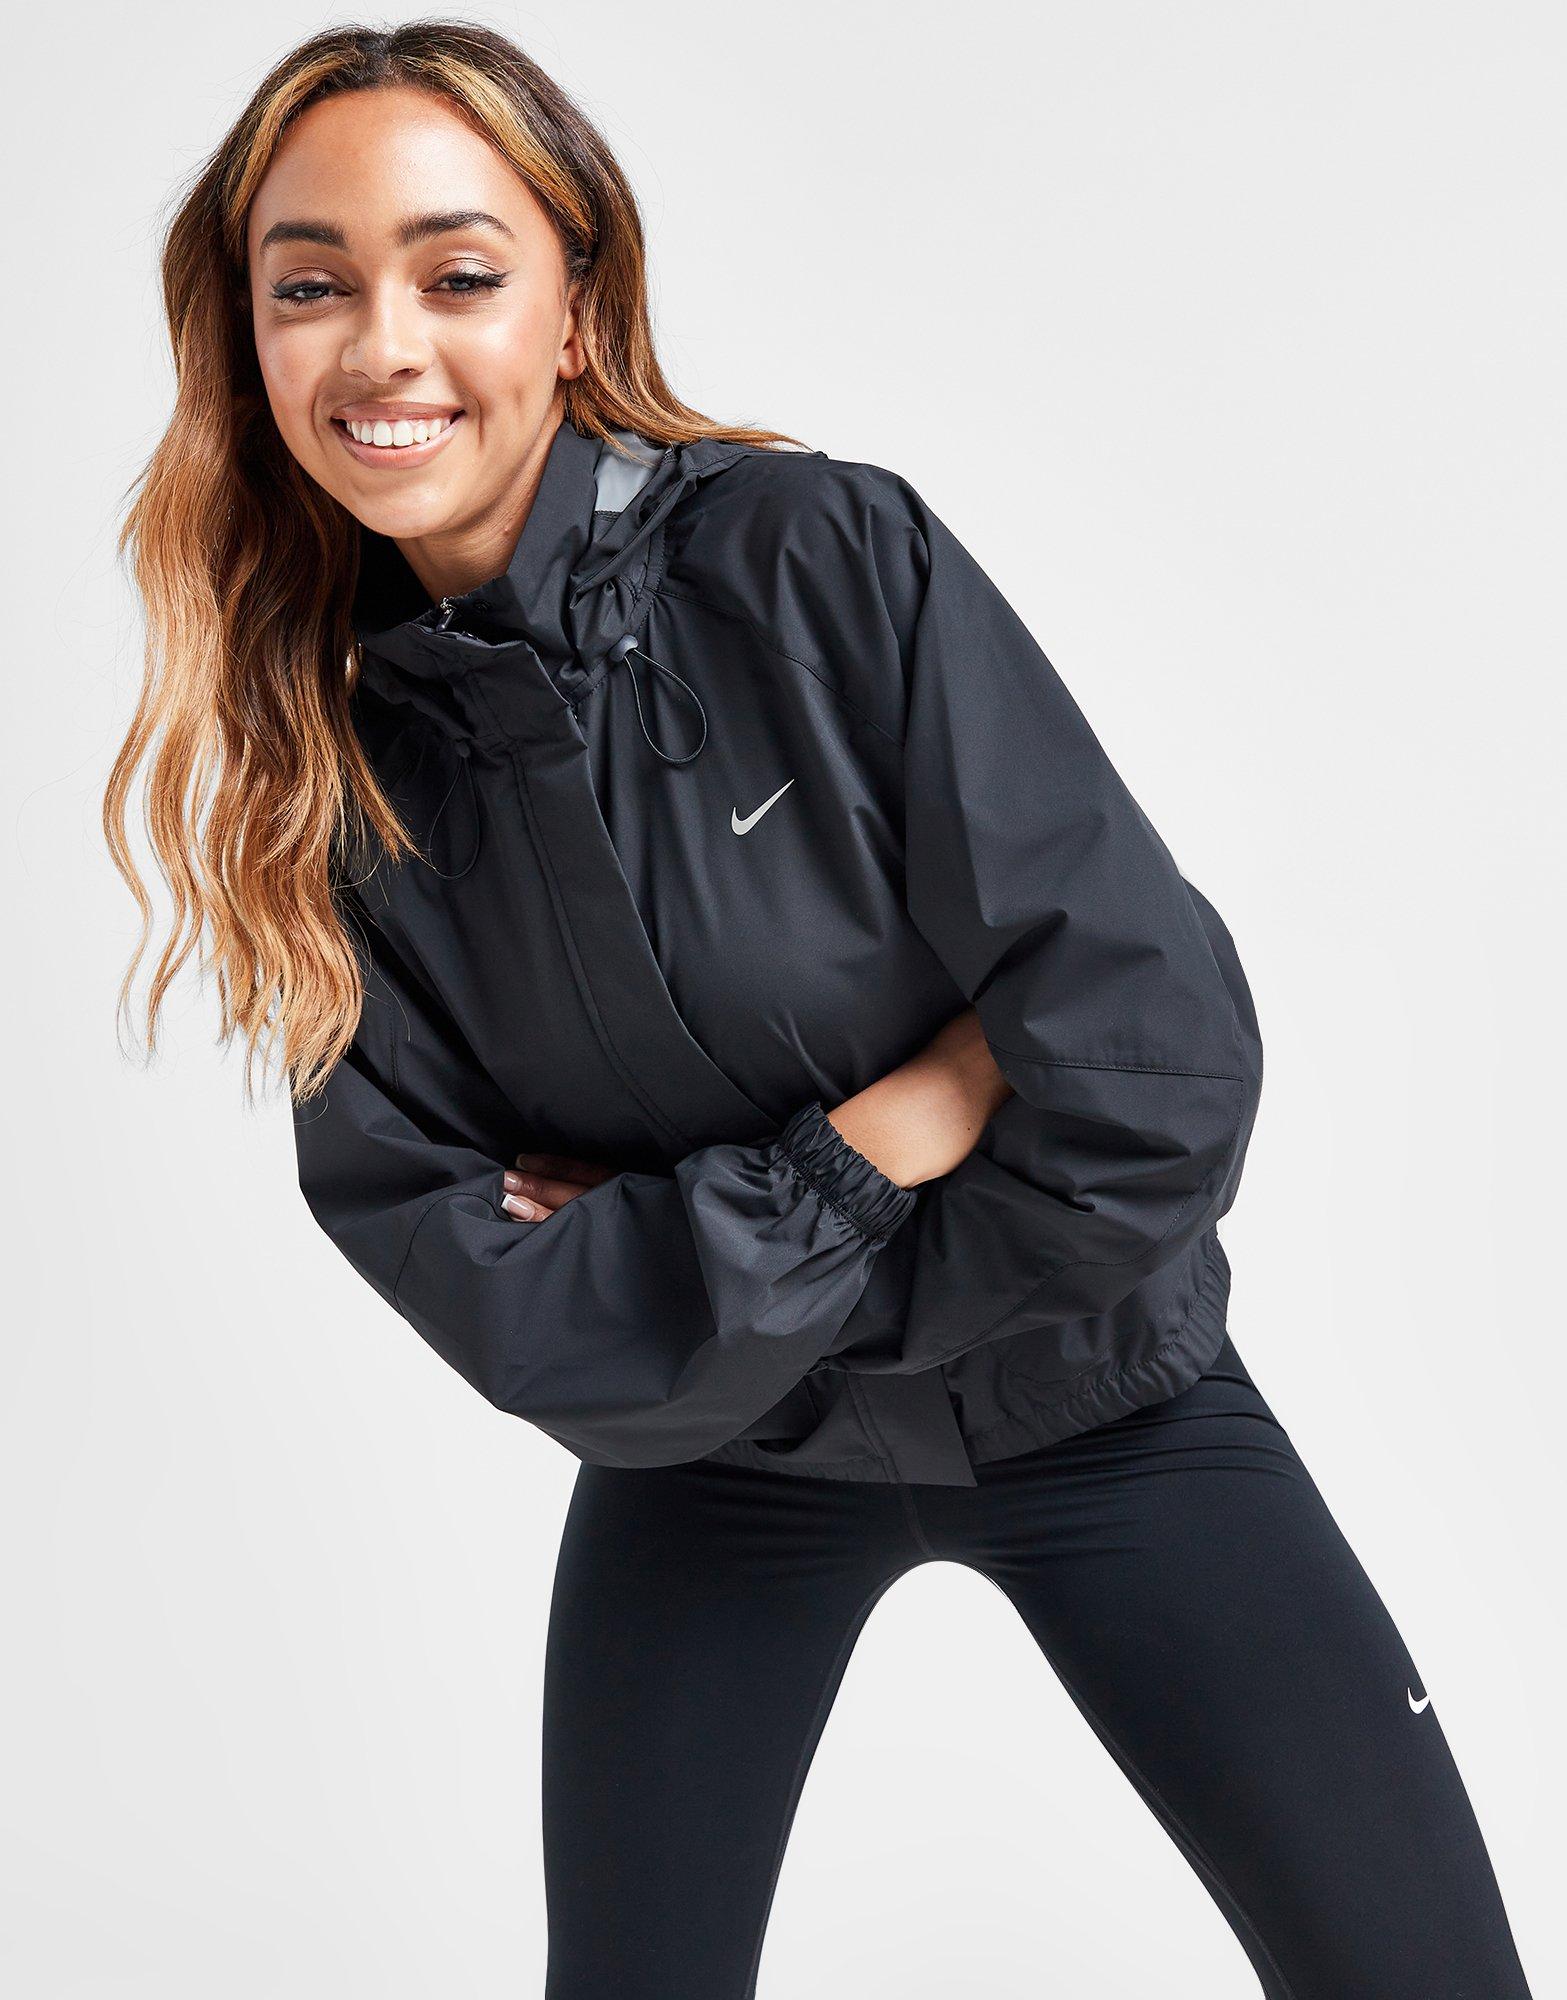 Nike Womens Legendary Mid Rise Zip Cuff Training Tights 